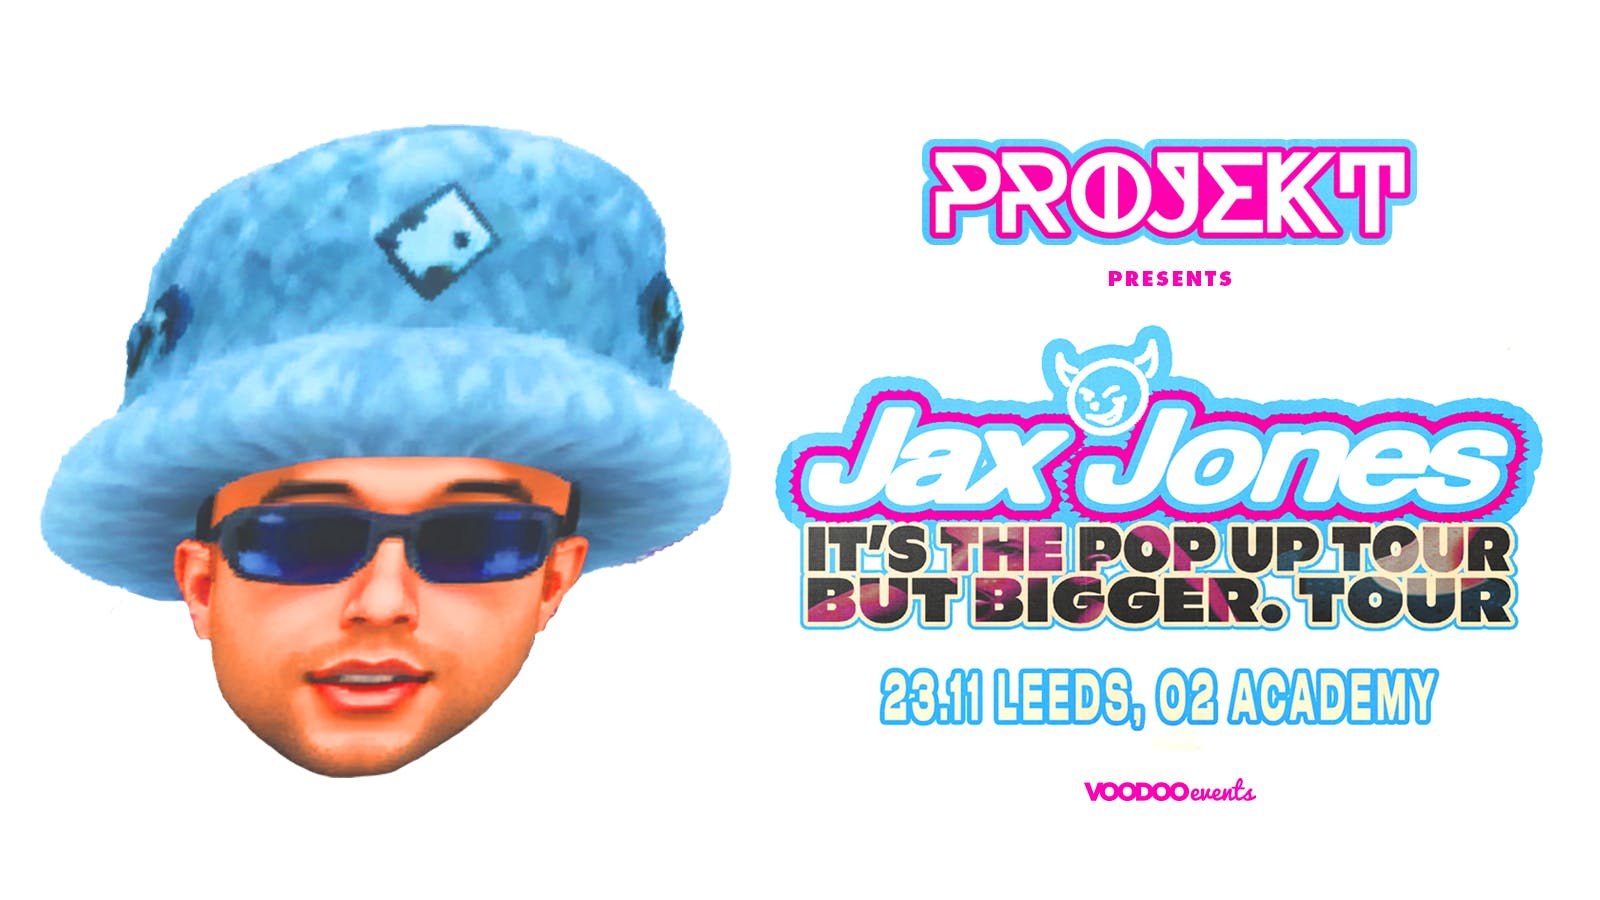 Projekt Presents Jax Jones 23rd November